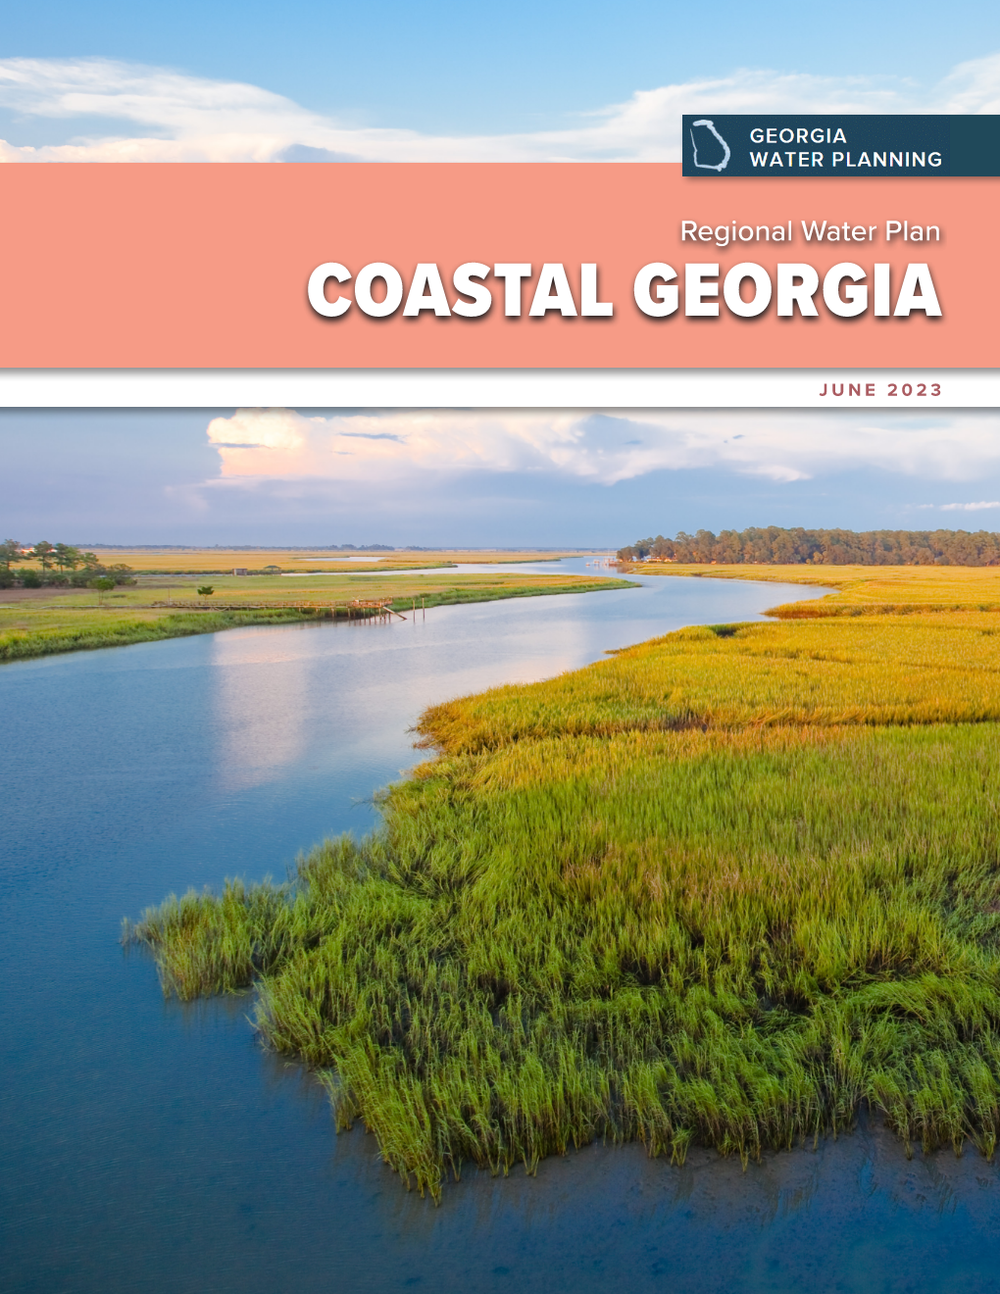 Coastal Georgia Regional Water Plan Georgia Water Planning 9004